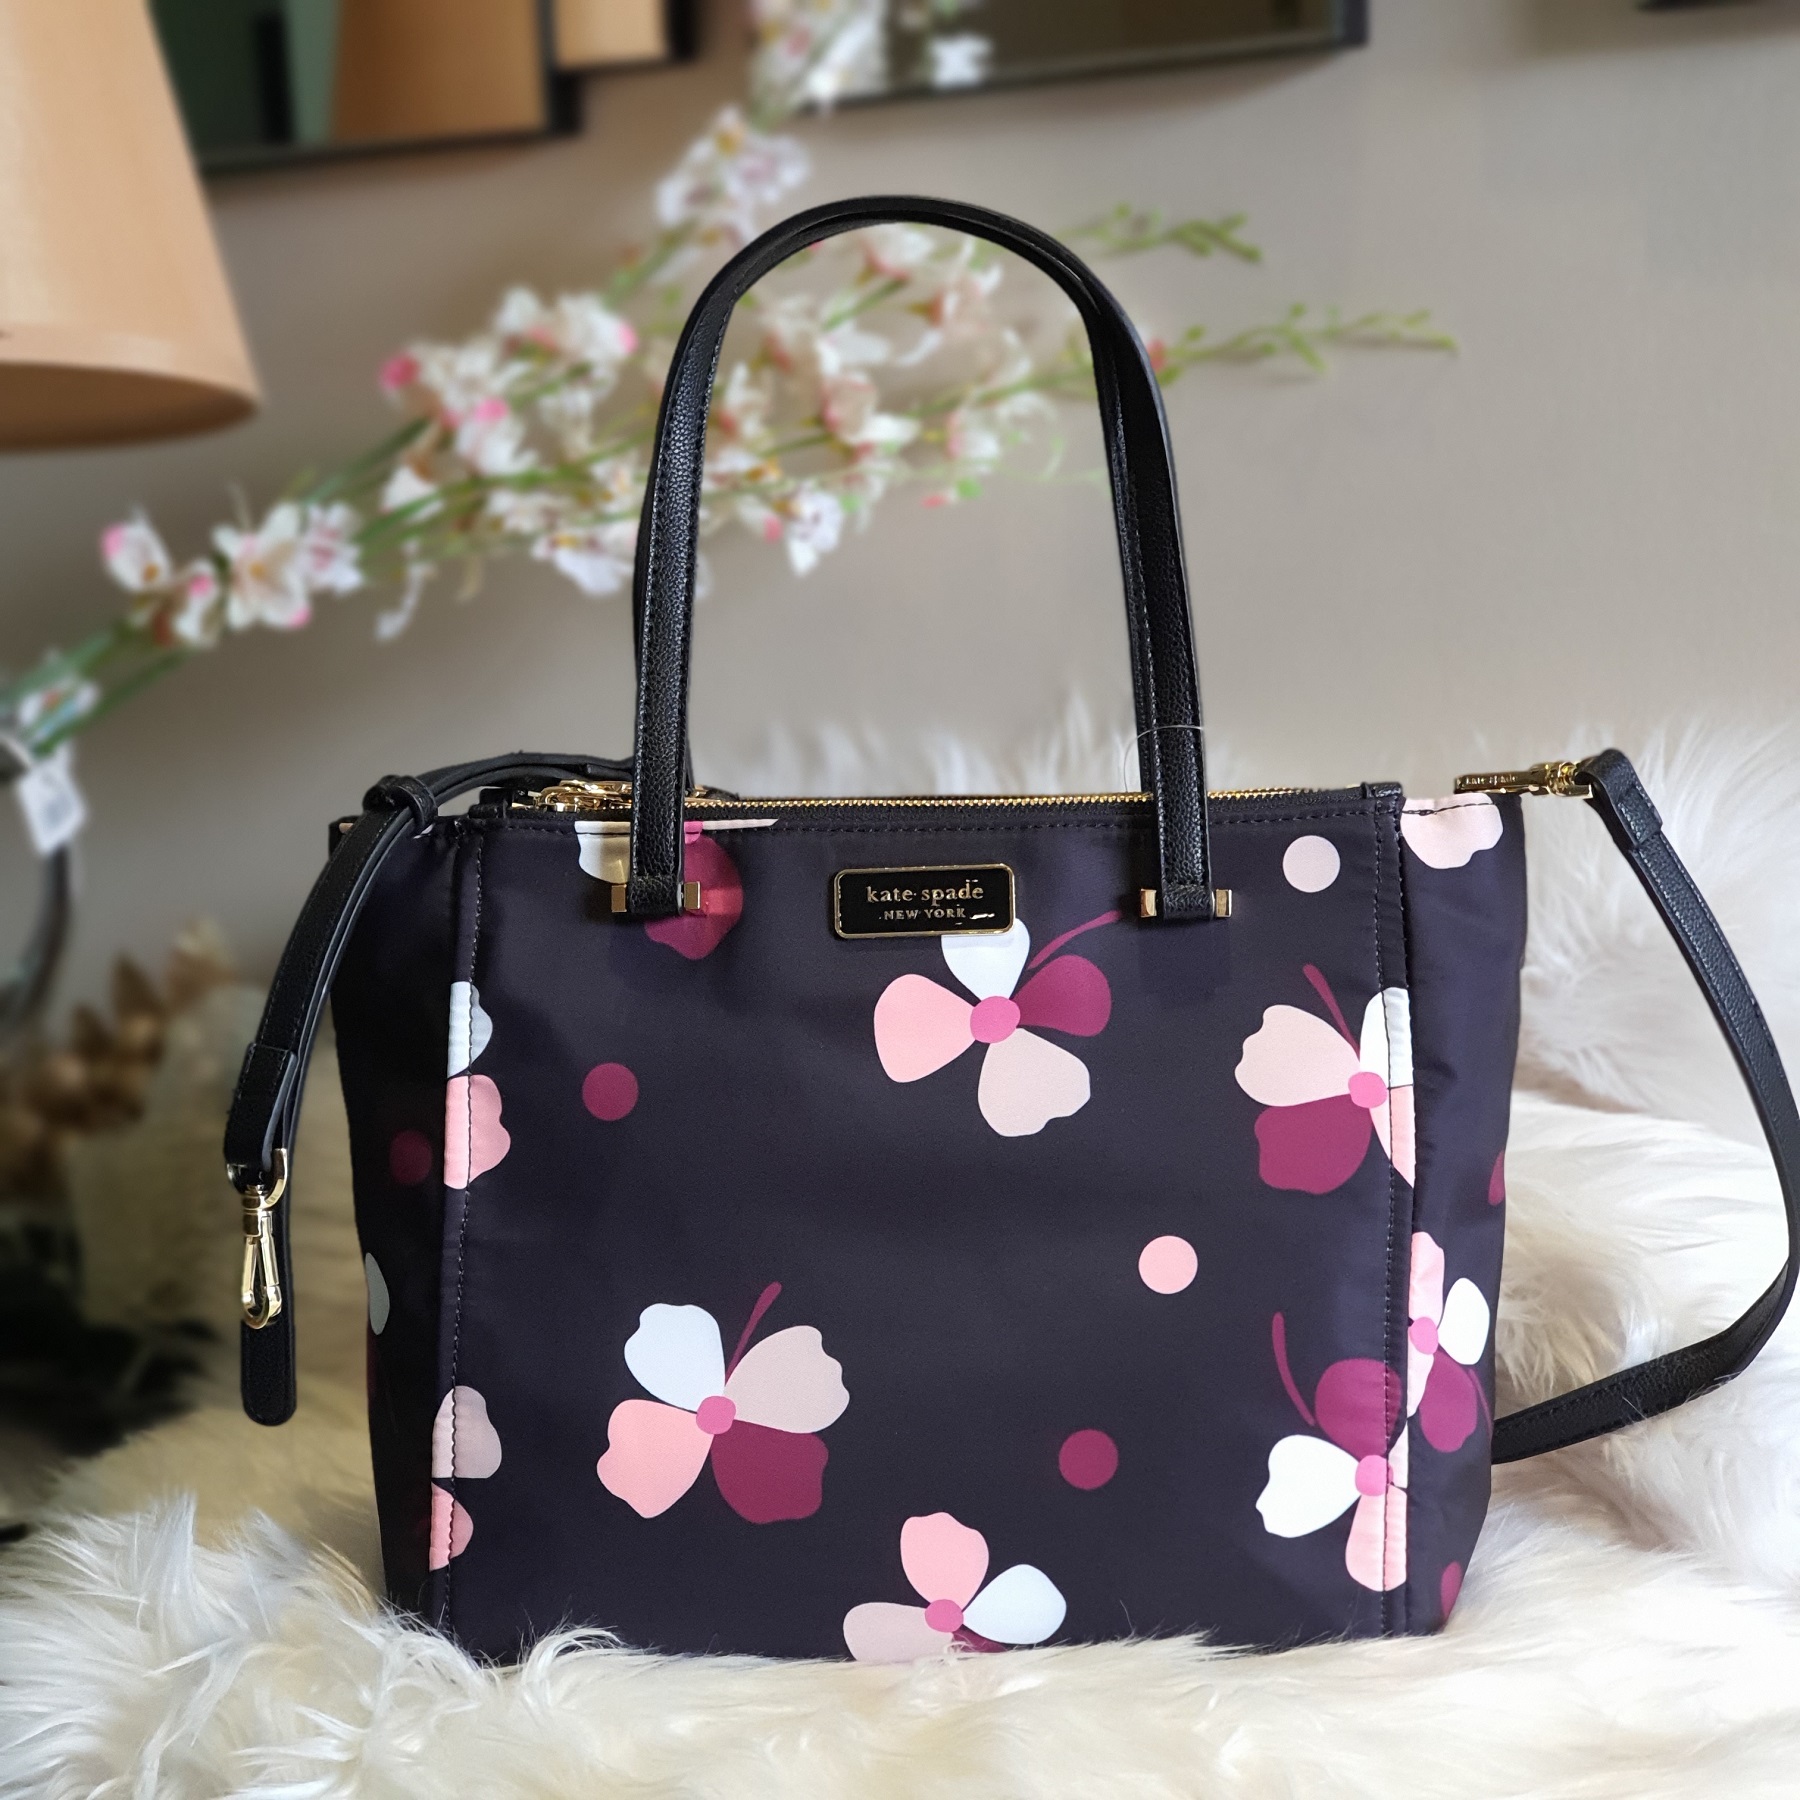 Guaranteed Original Kate Spade Black Daisy Flower Print Women's Tote Bag  with Sling Classic Medium Dawn Satchel Two Zip and Tab Closure Nylon Bag |  Lazada PH